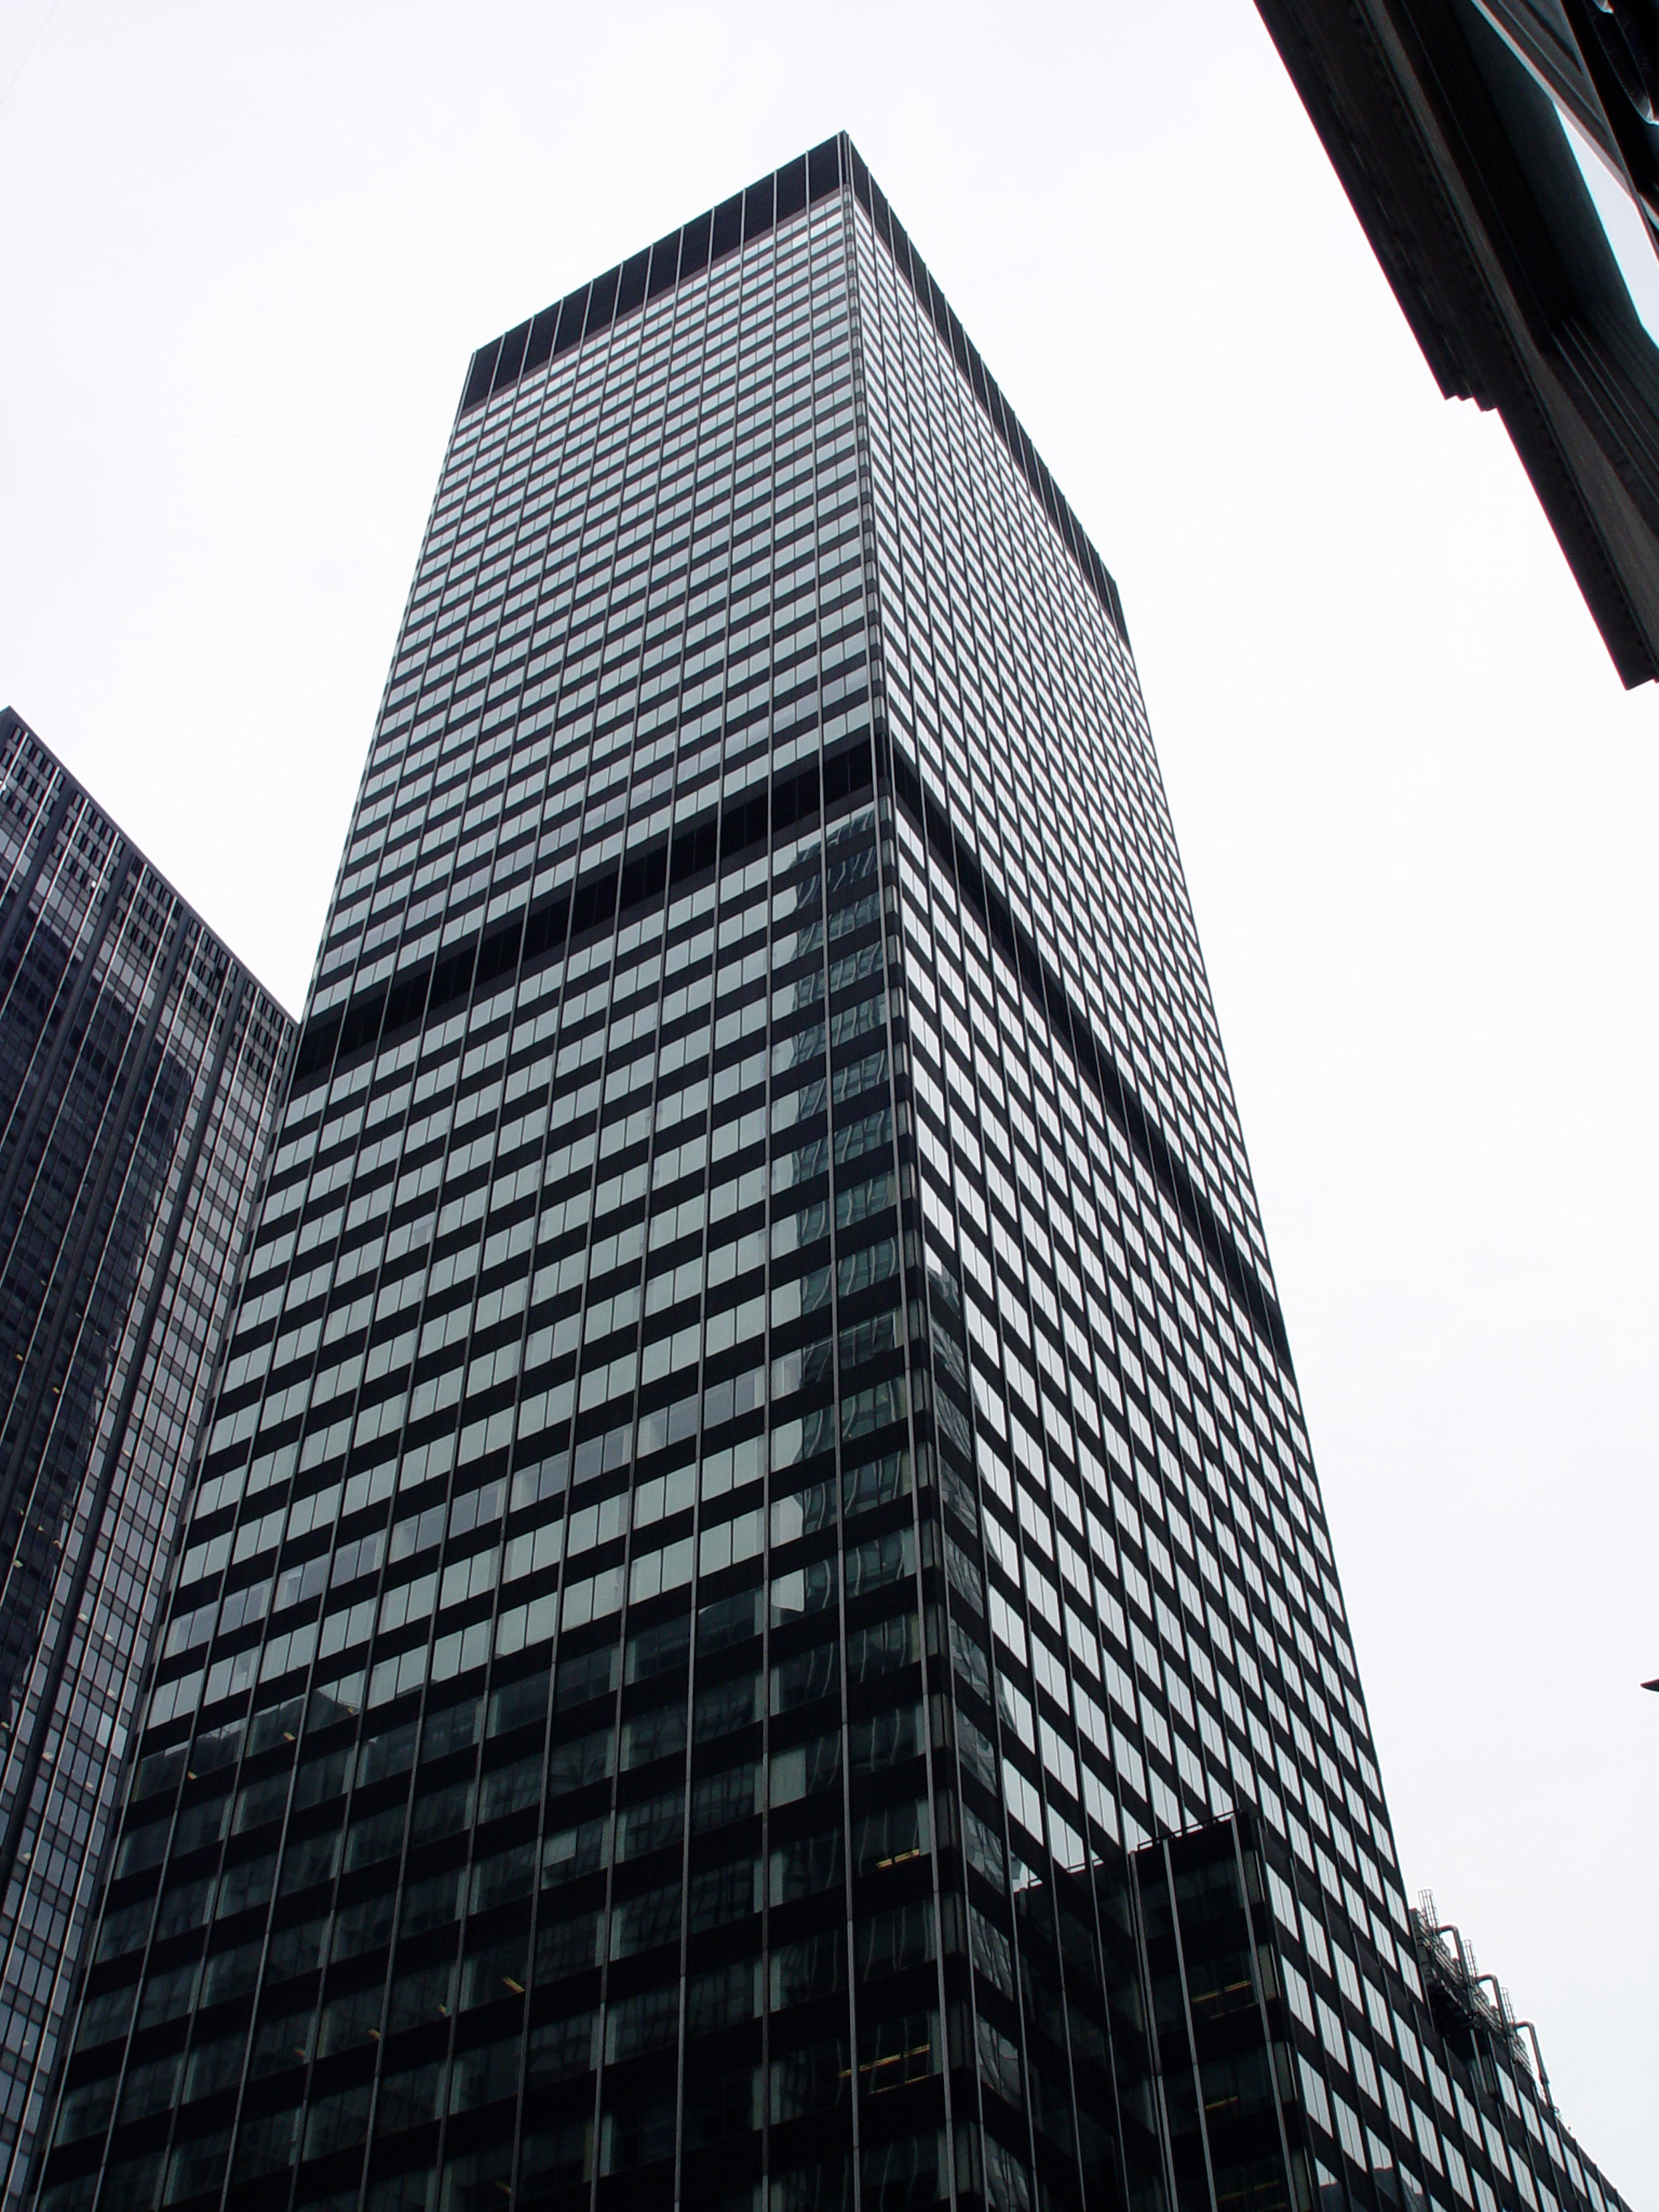 SOM's modernist Park Avenue skyscraper faces demolition